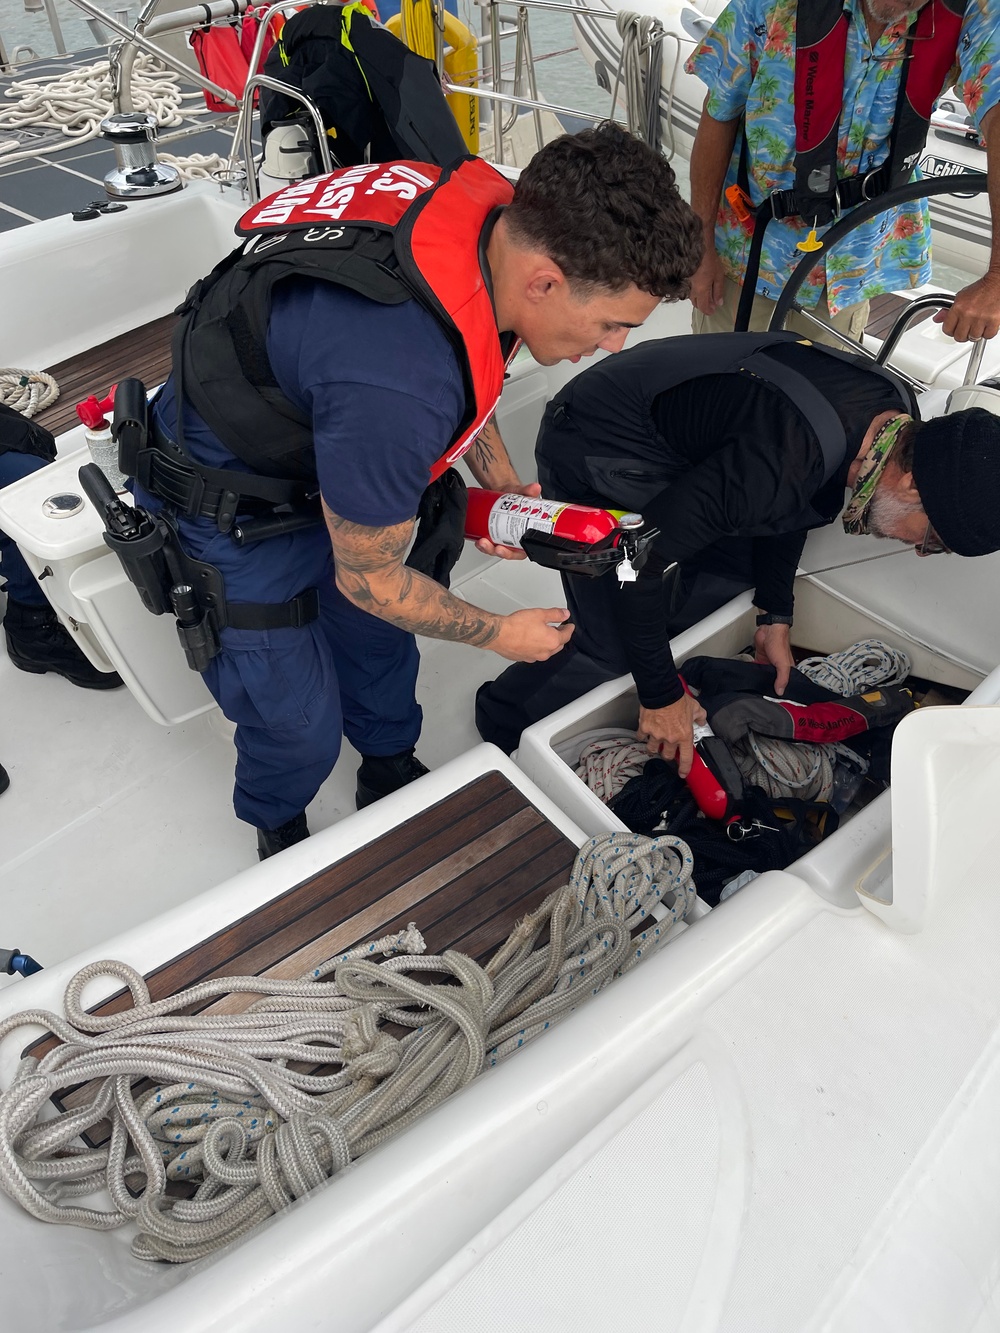 Coast Guard assists 2 aboard disabled sailing vessel off Galveston, Texas